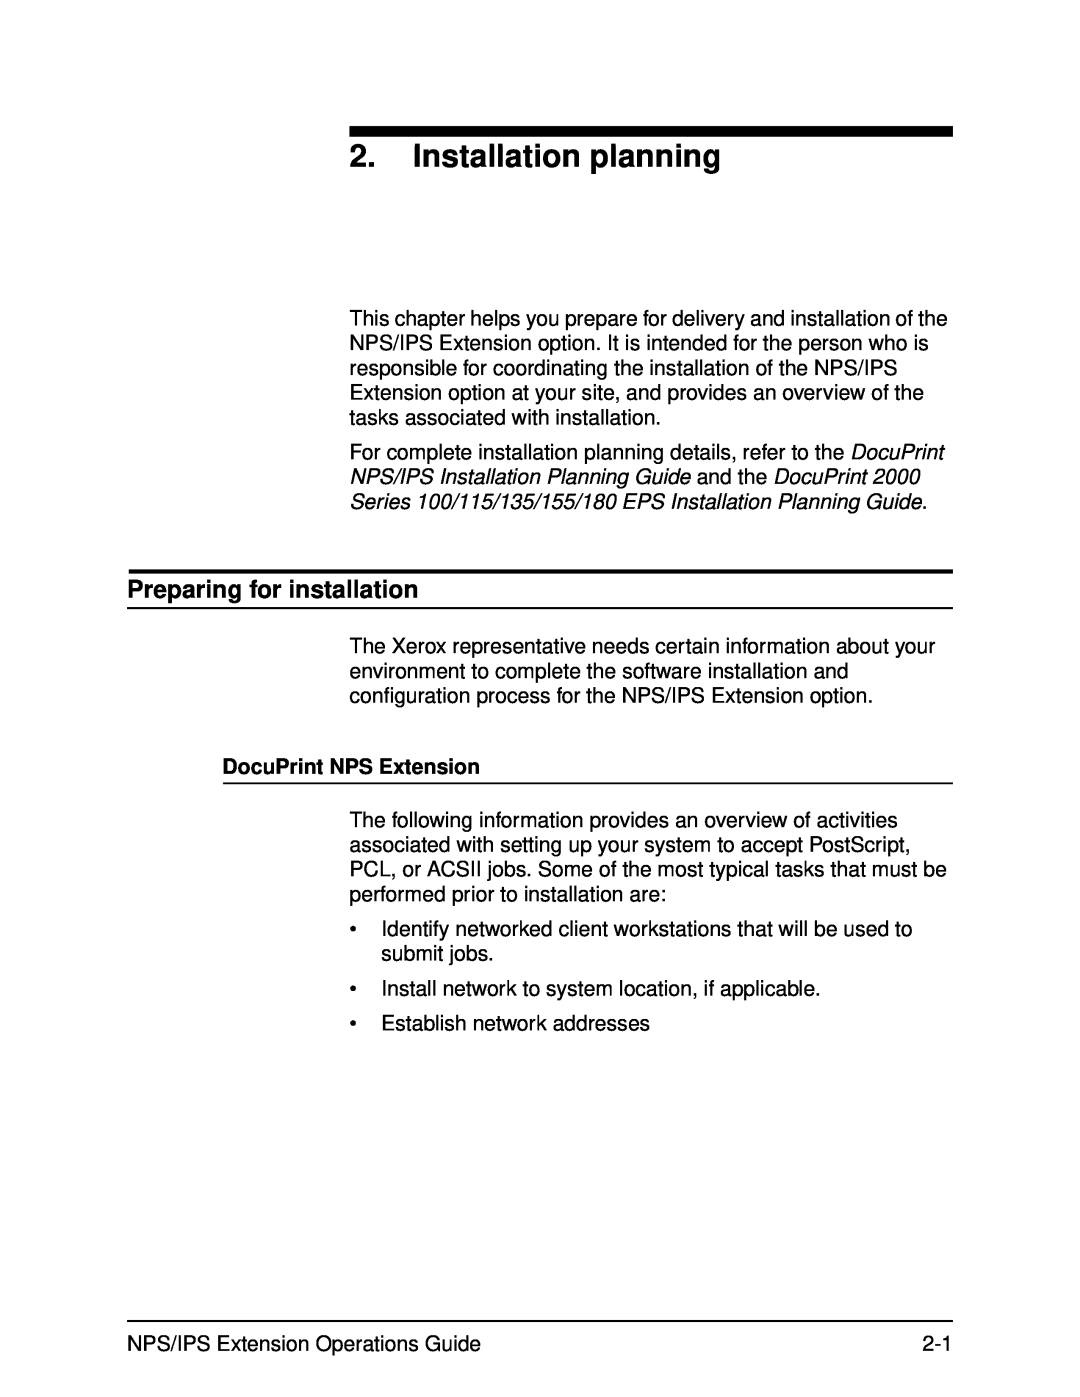 Xerox 2000 Series manual Installation planning, Preparing for installation 